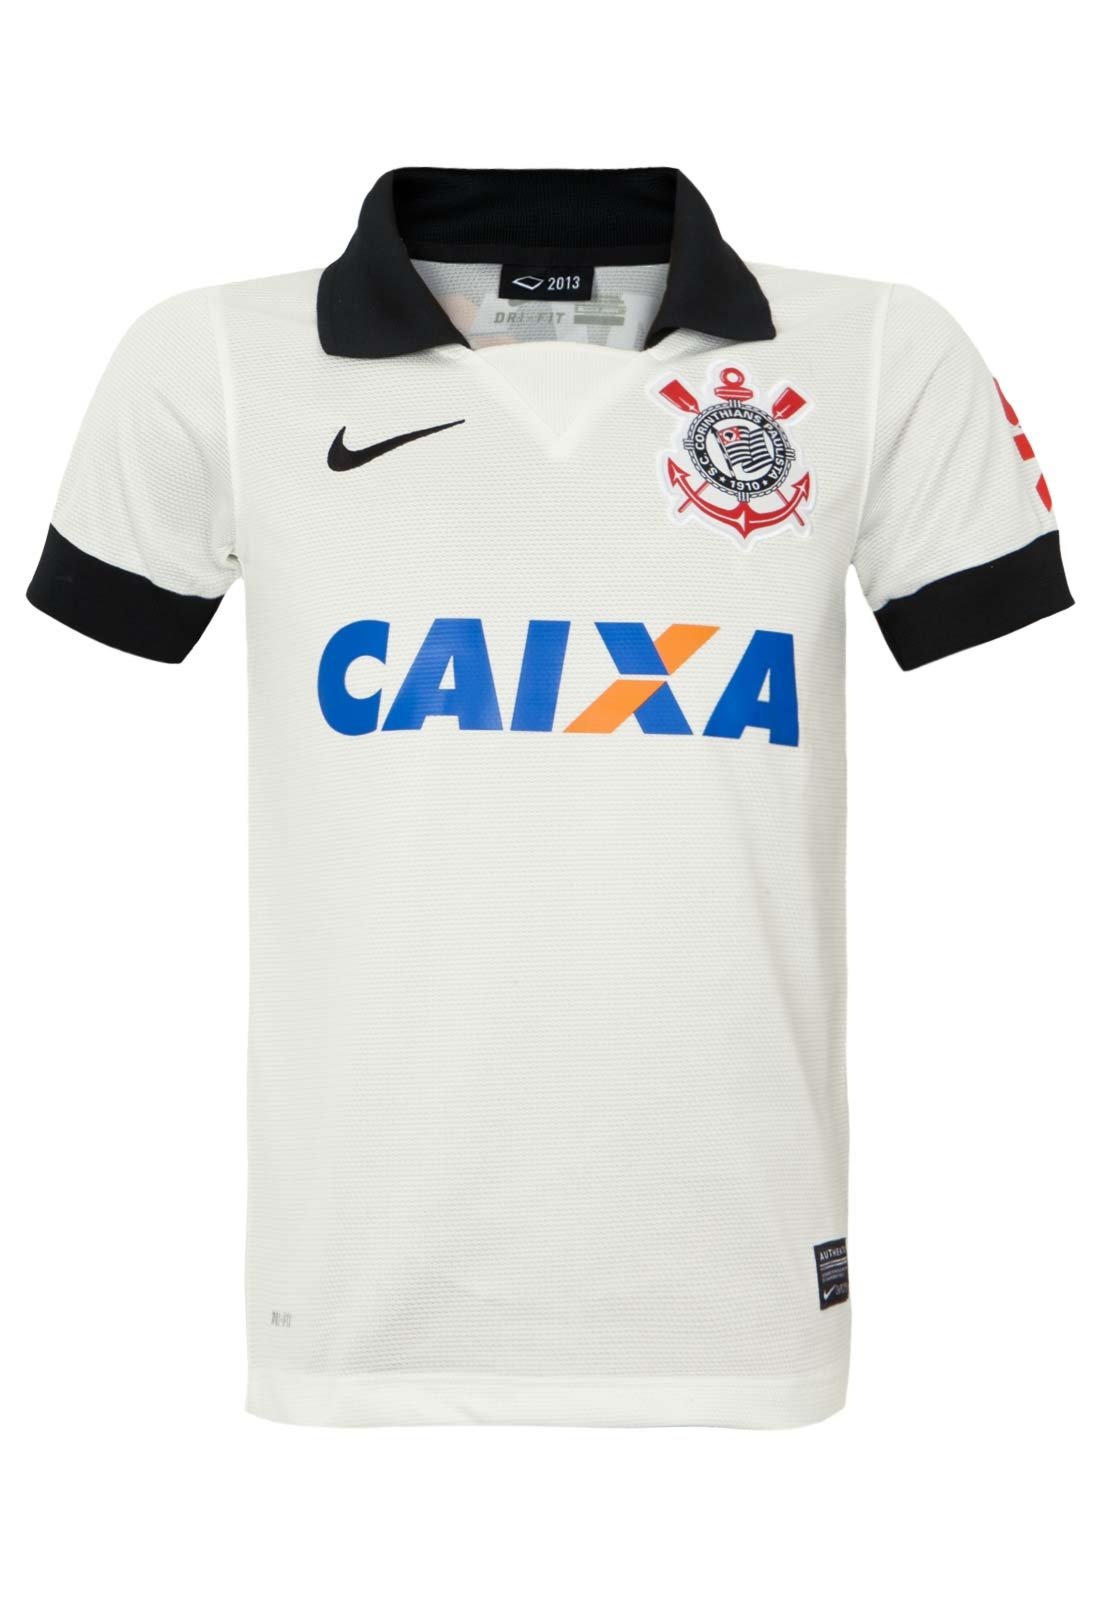 Nike-Camisa-Nike-Corinthians-Infantil-Torcedor-Branca-1216-3111531-1-zoom.jpg